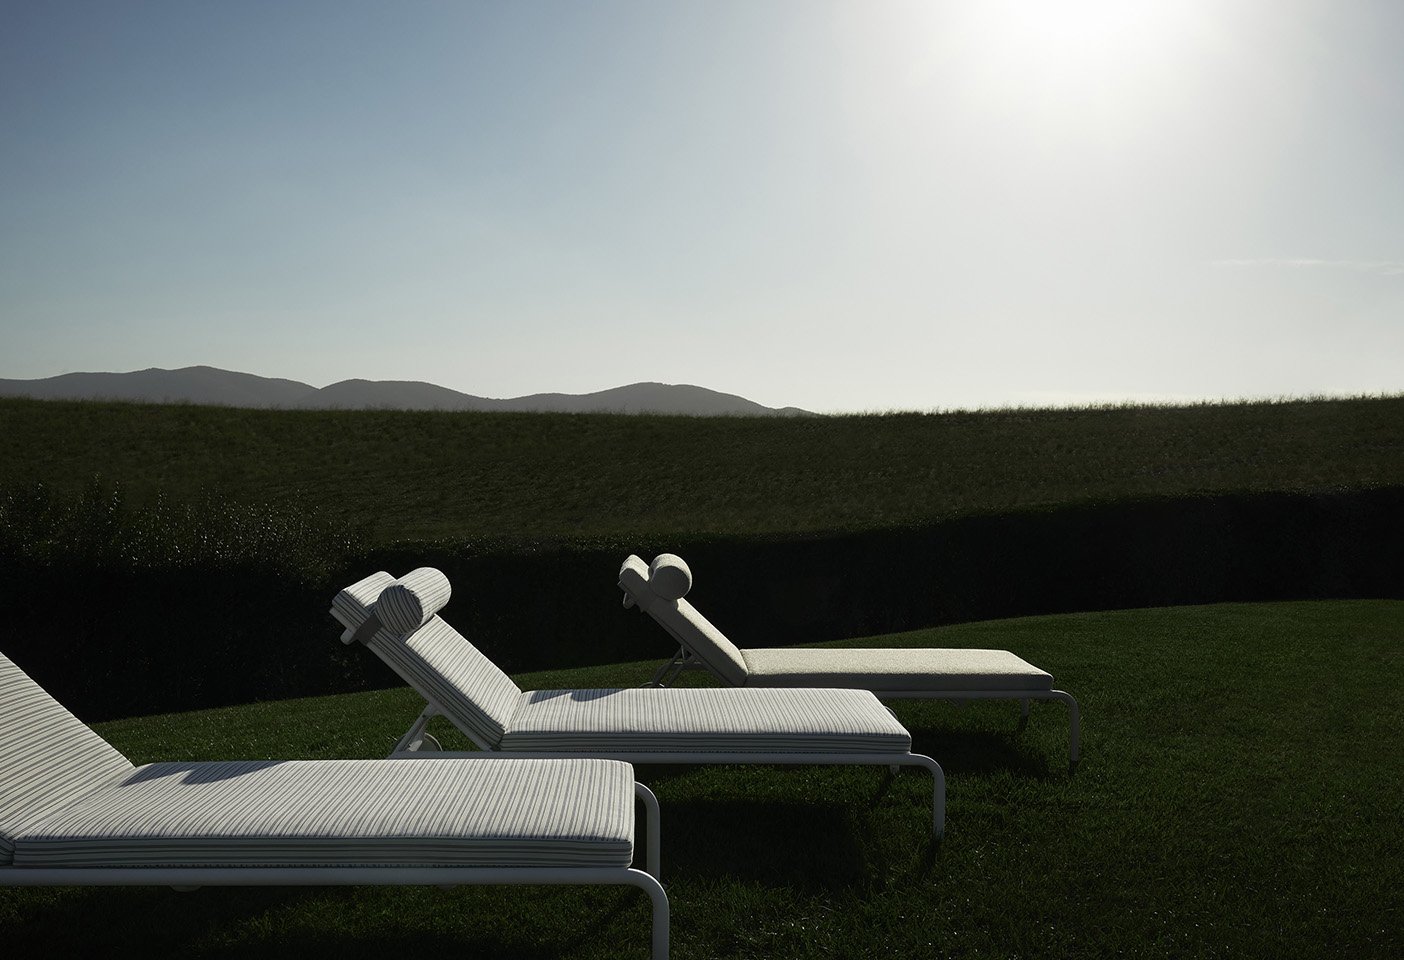 The Borea outdoor lounger designed by Piero Lissoni for B&B Italia. Photo Tommaso Sartori c/o B&B Italia.